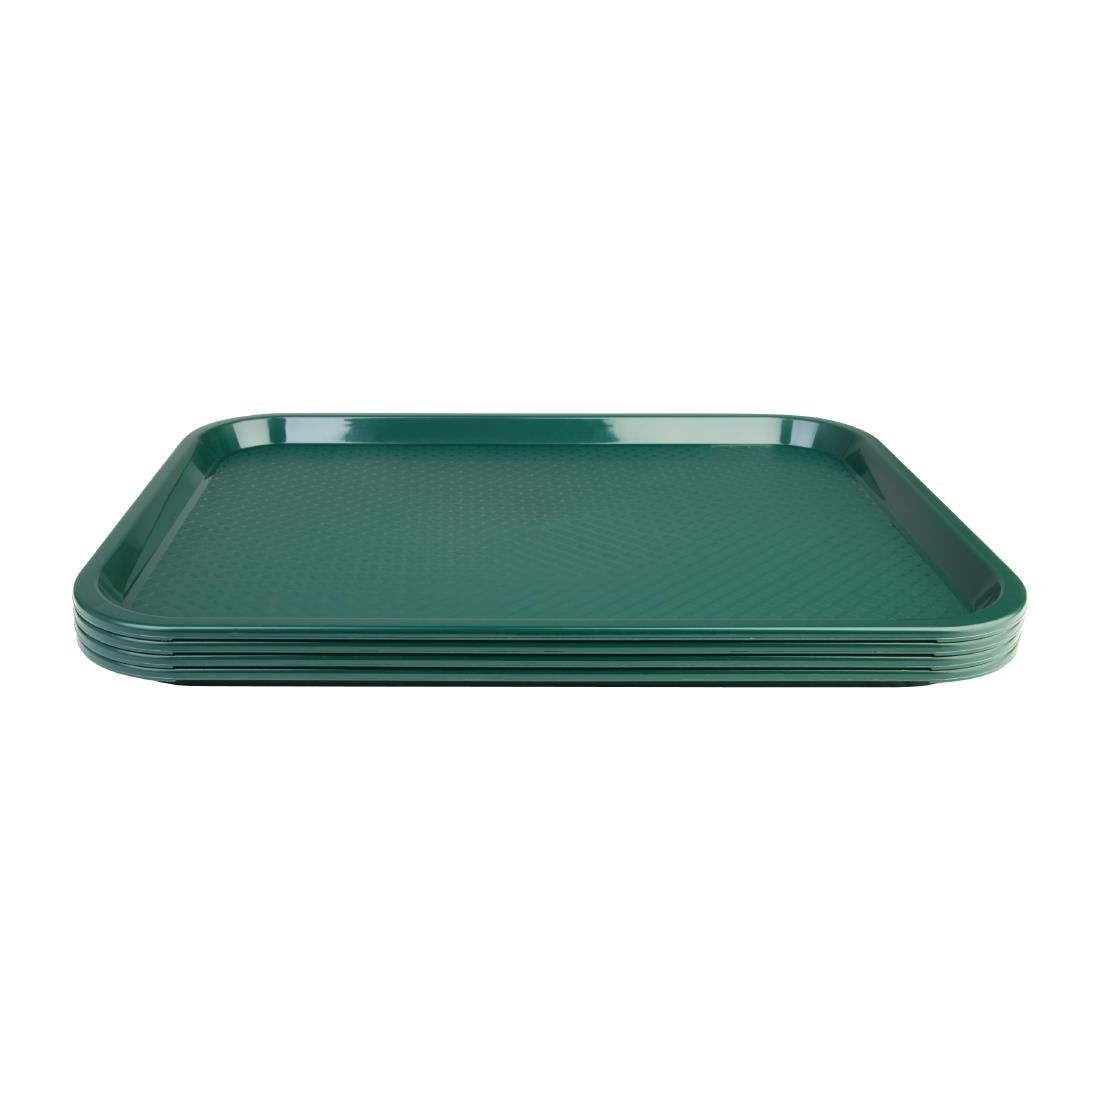 Kristallon Medium Polypropylene Fast Food Tray Green 415mm JD Catering Equipment Solutions Ltd